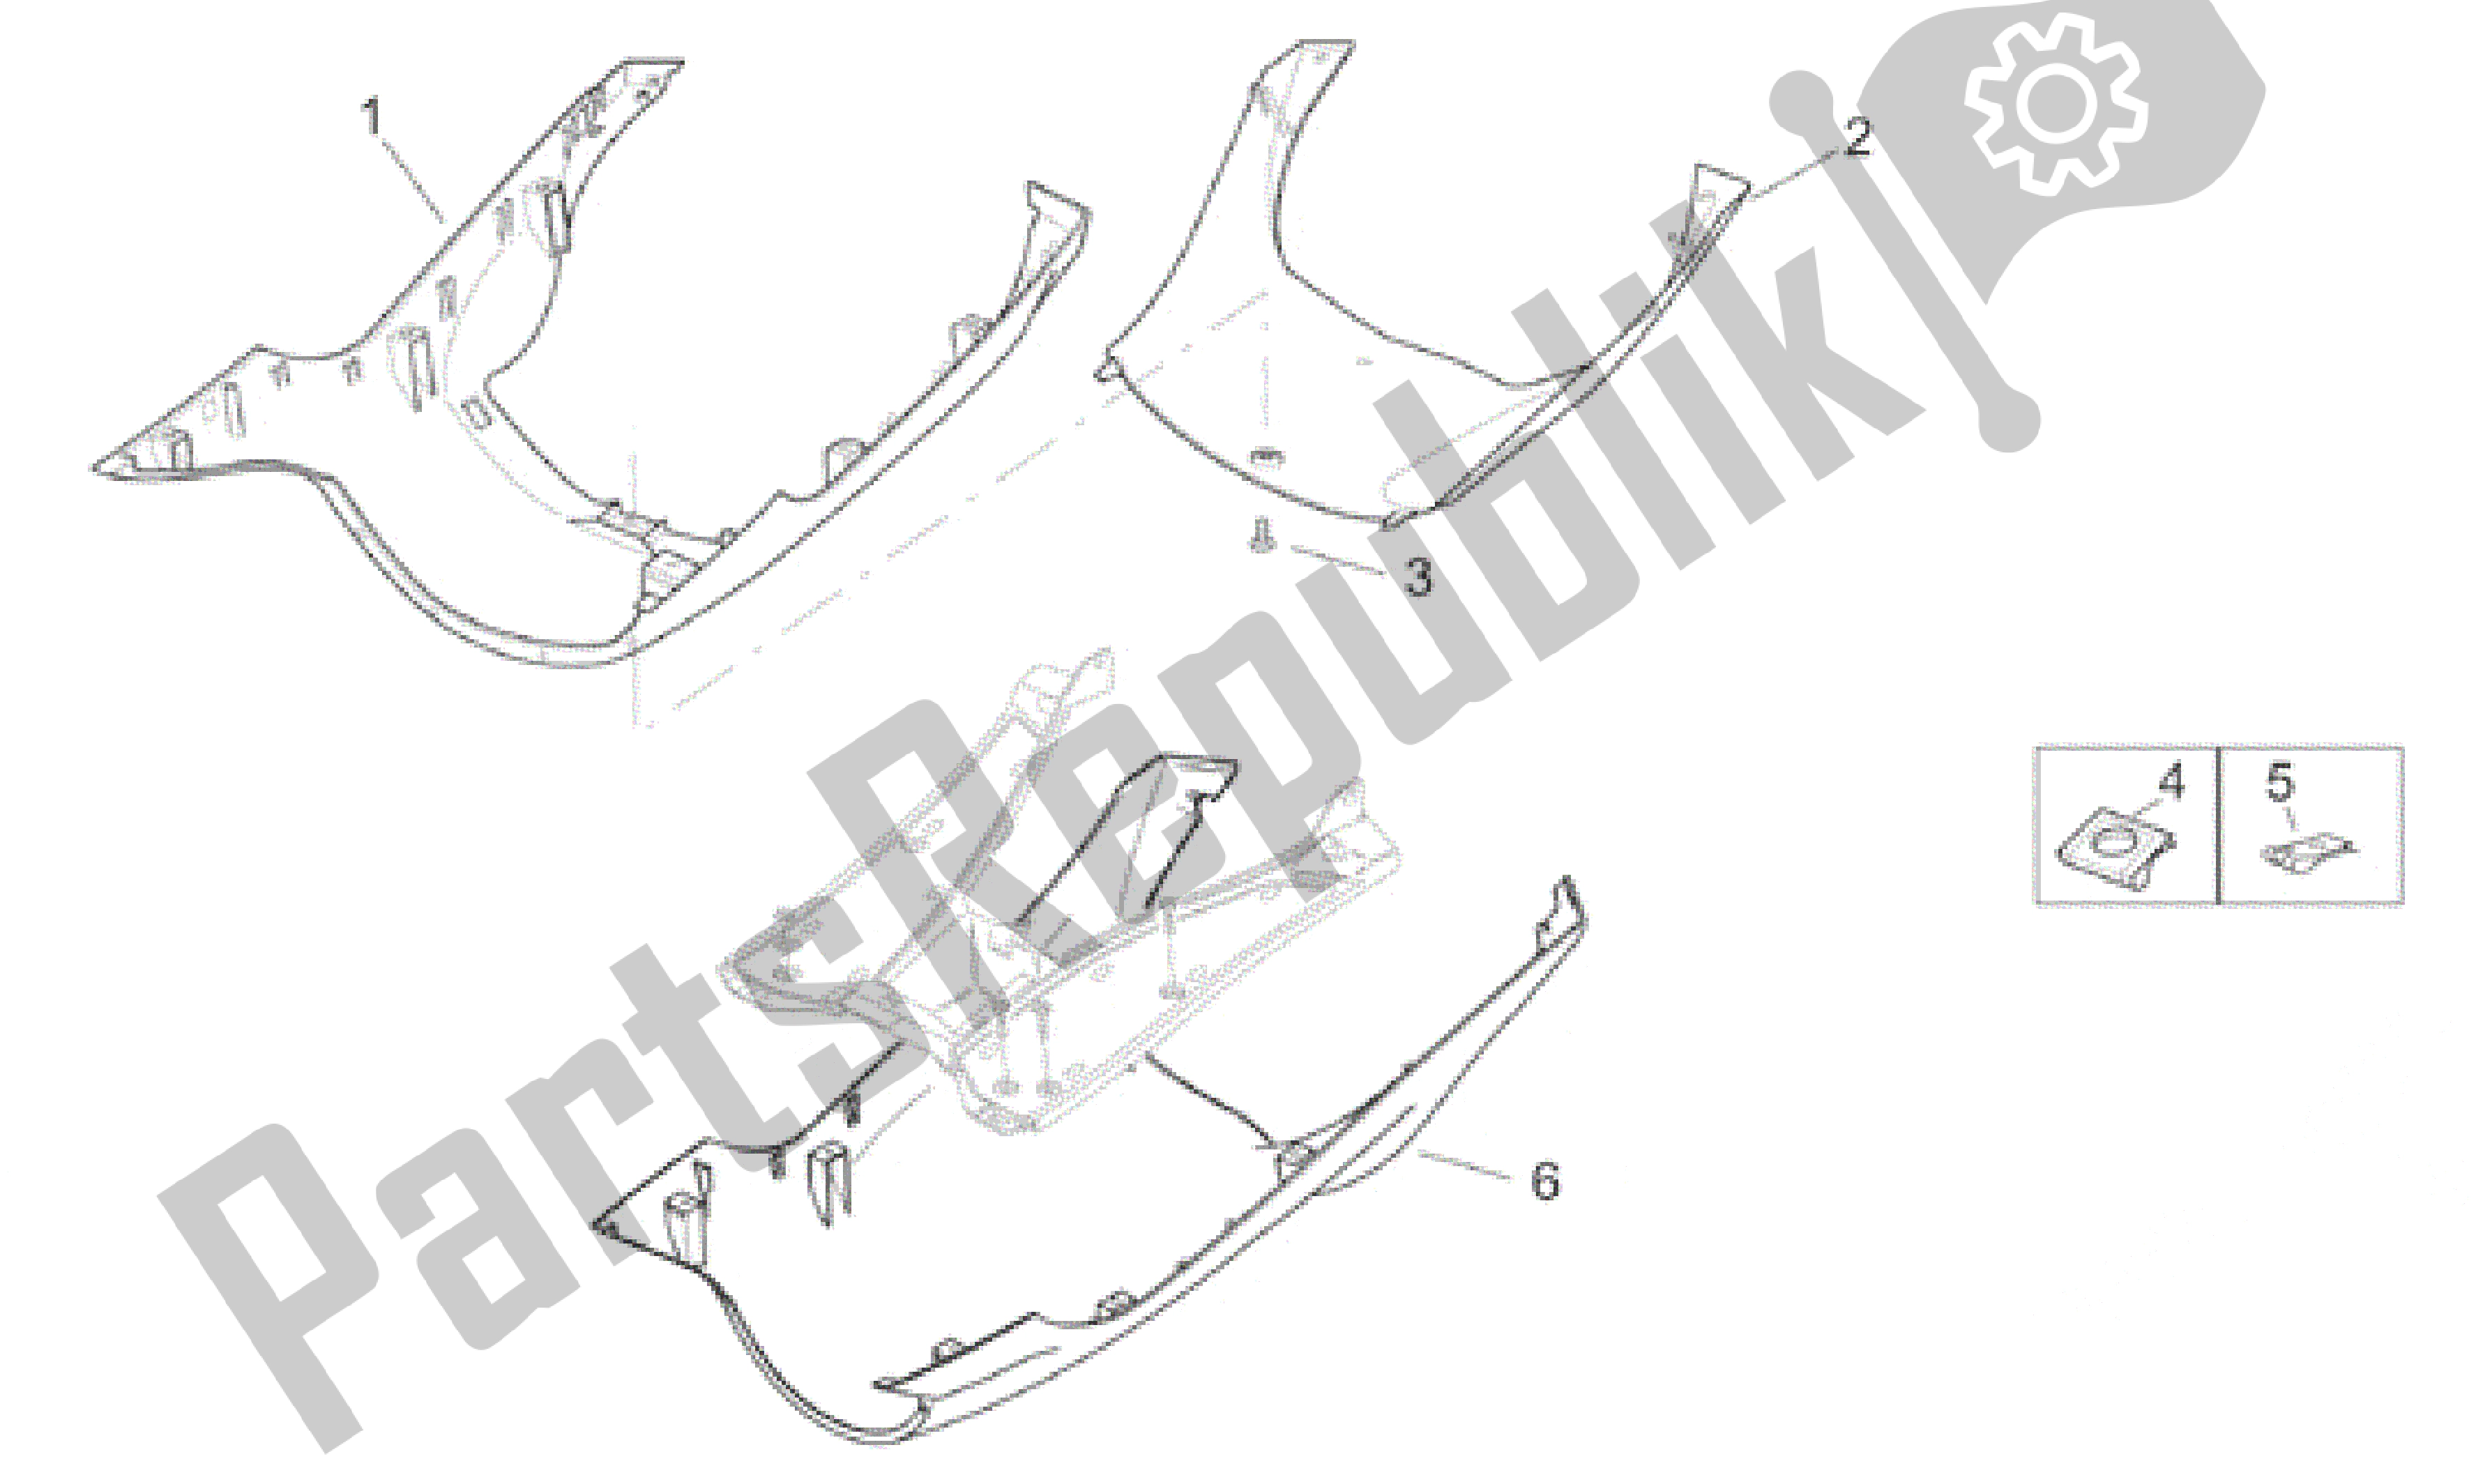 All parts for the Central Body - Underpanel of the Aprilia SR 125 1999 - 2001